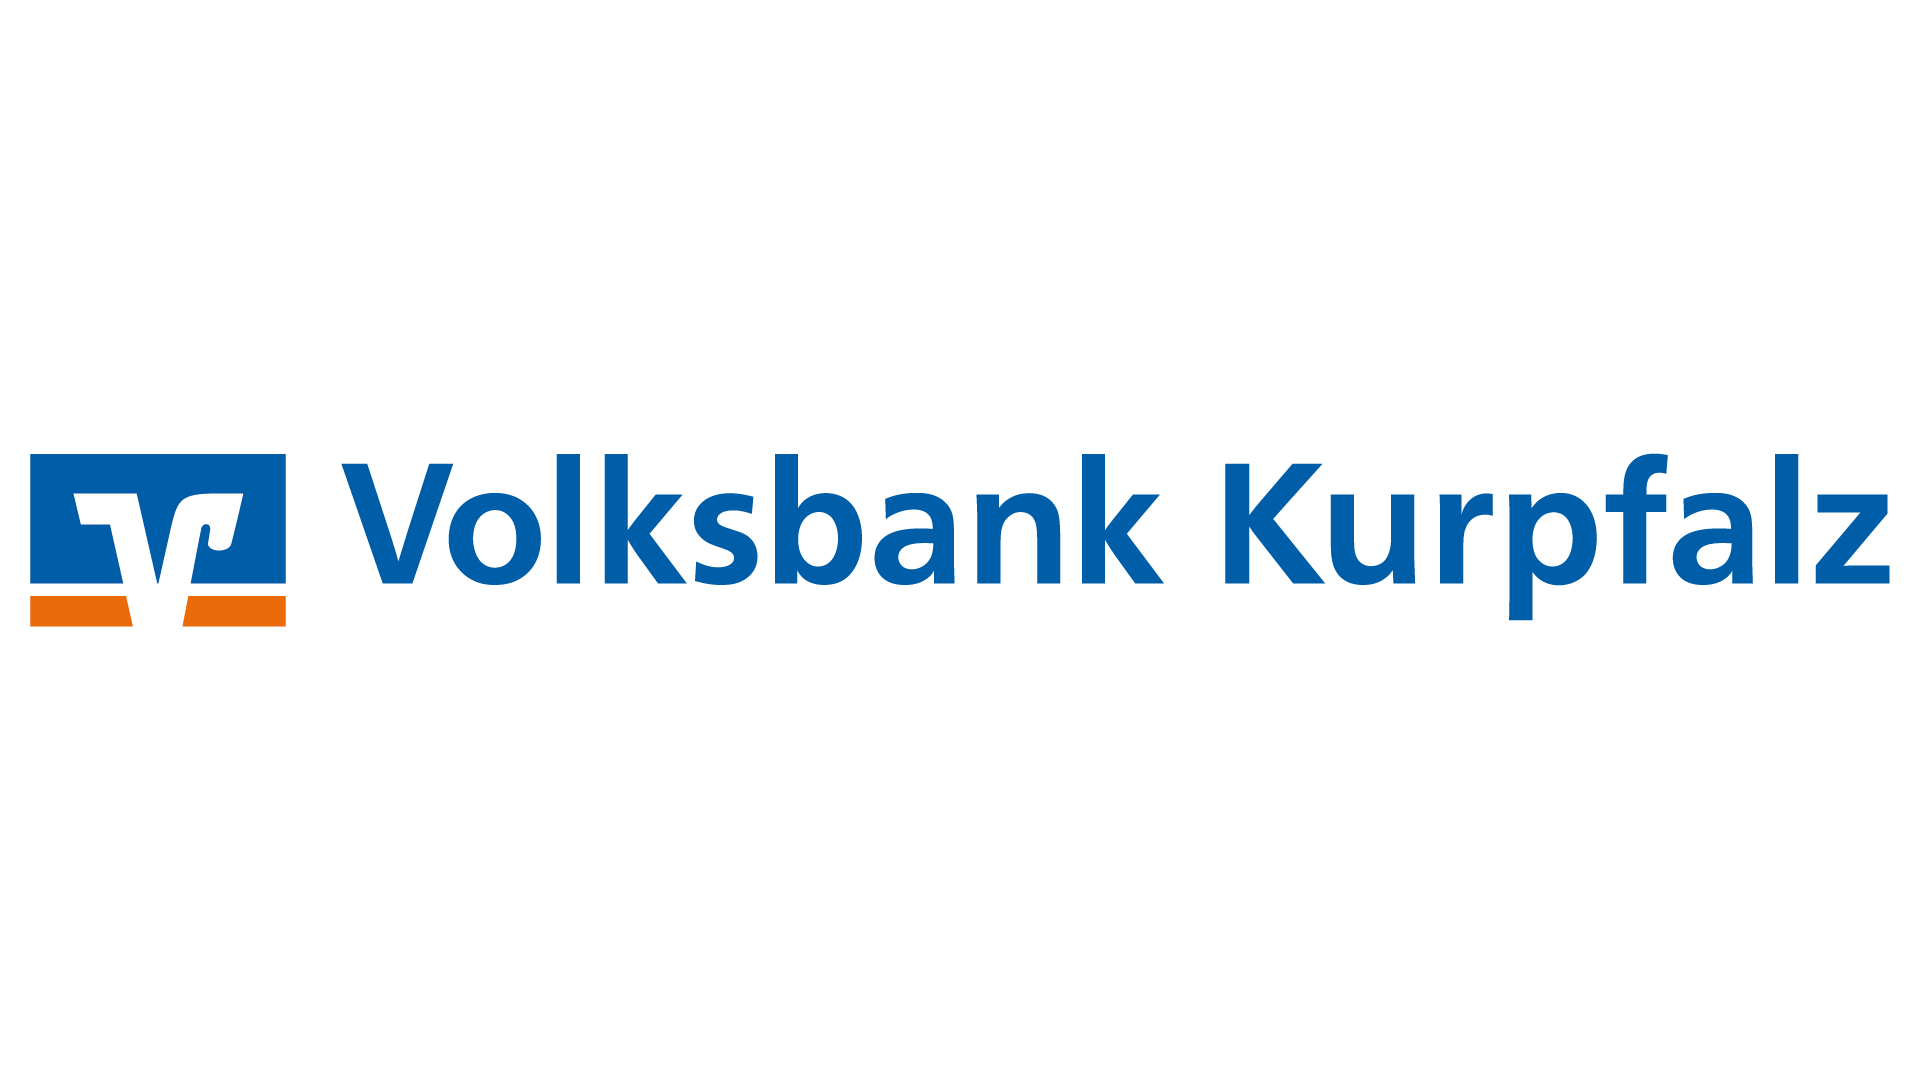 Volksbank Kurpfalz